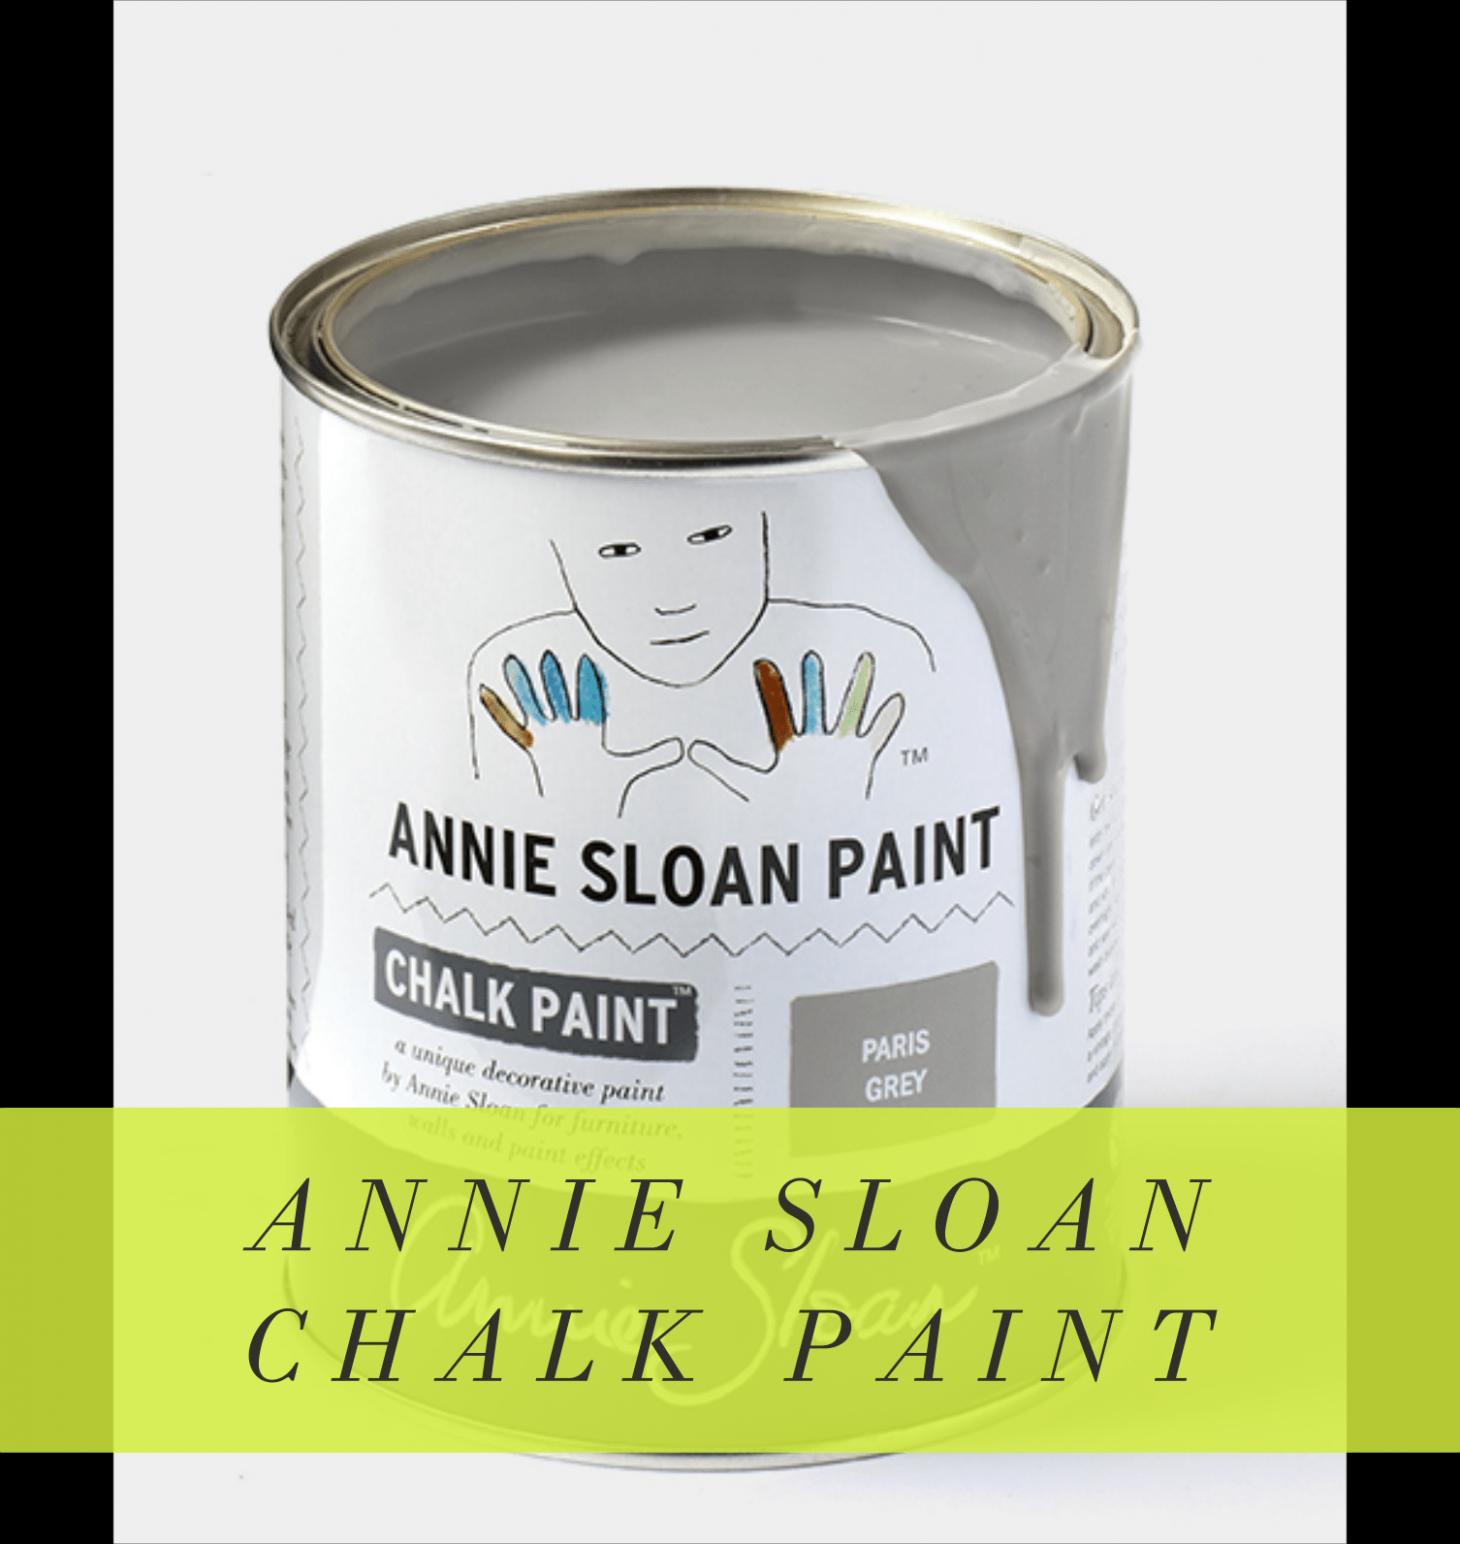 Annie Sloan Chalk Paint London Lovehandmade Annie Sloan Chalk Paint 2018